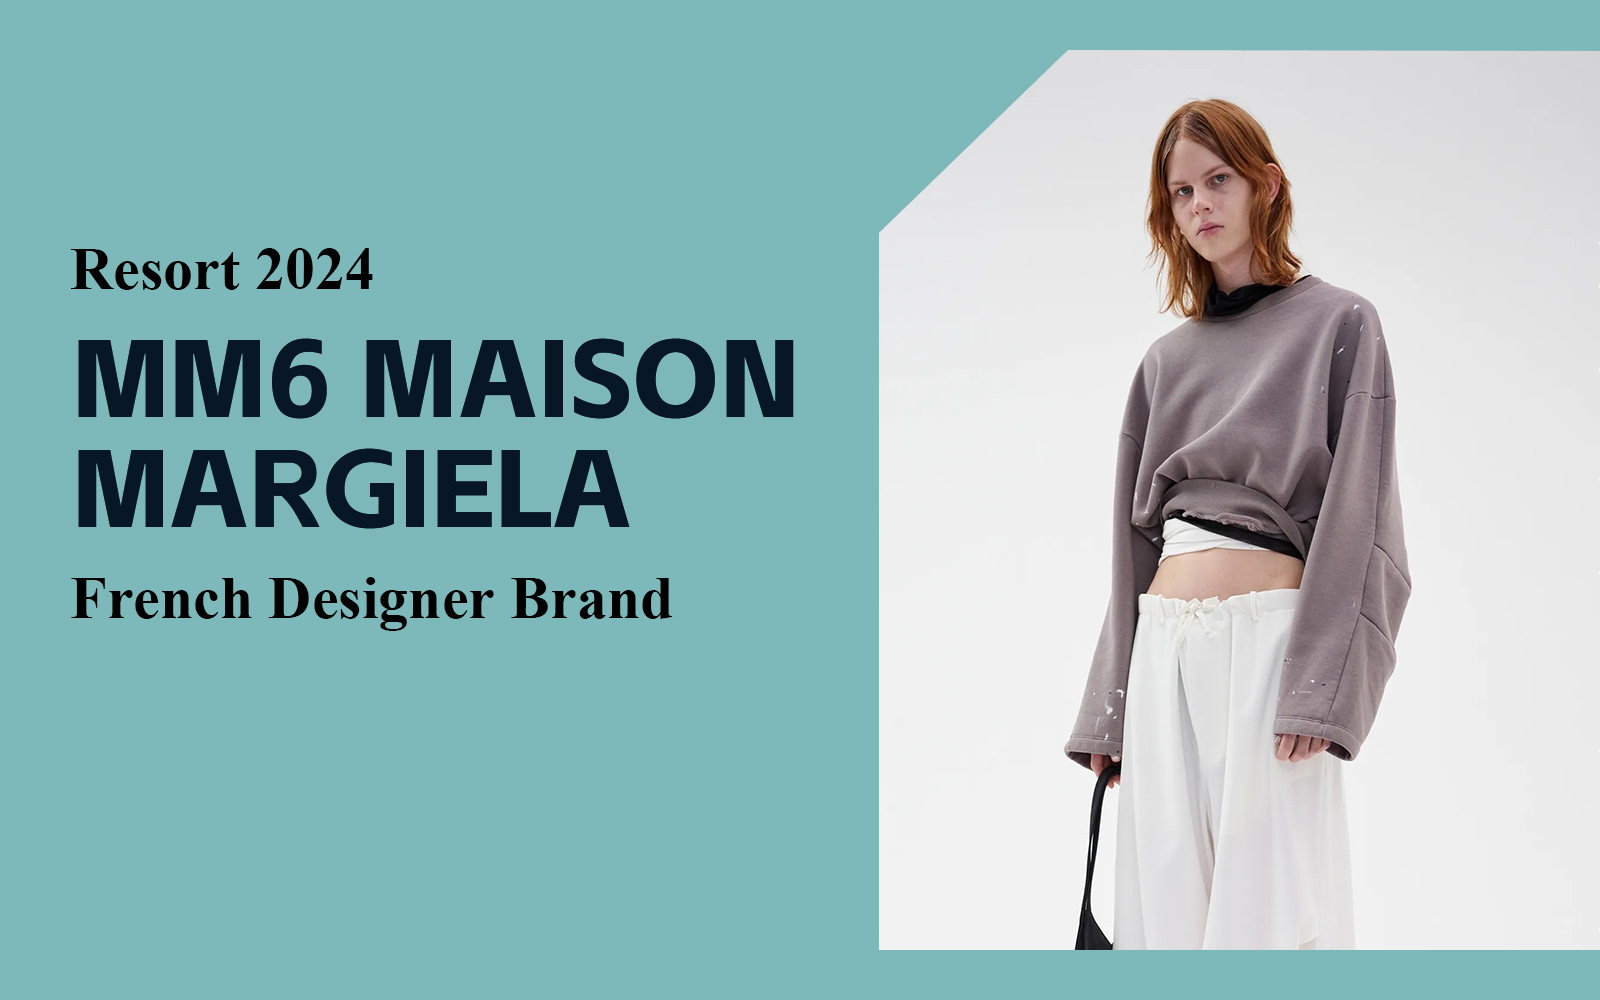 Lazy Commuting -- The Analysis of MM6 Maison Margiela The Womenswear Designer Brand